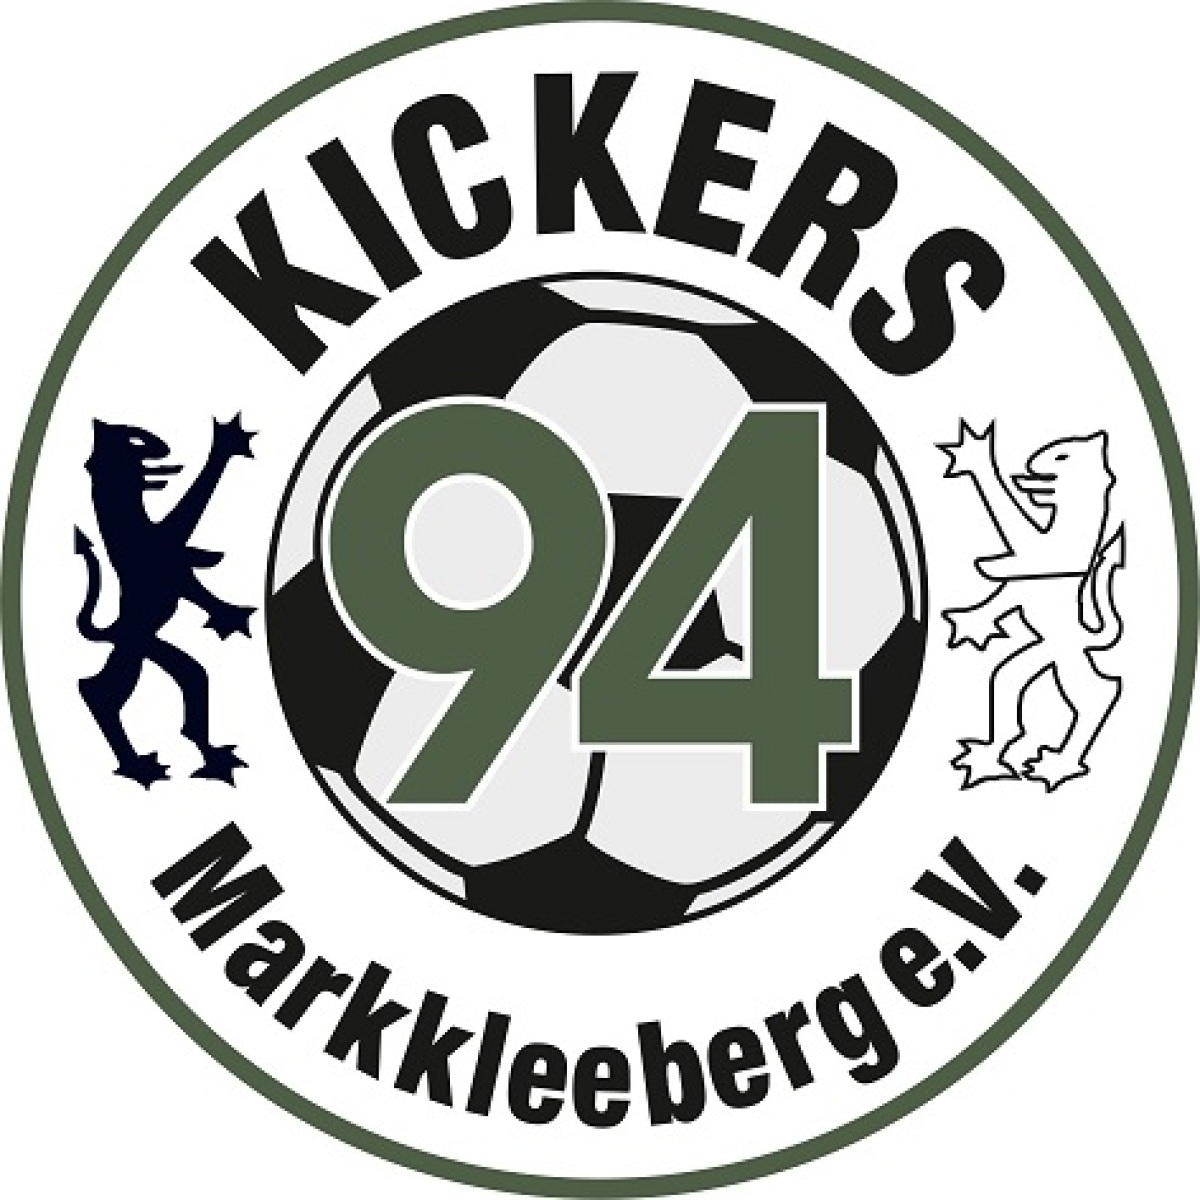 «Киккерс-94 II» Марклеберг, Фото